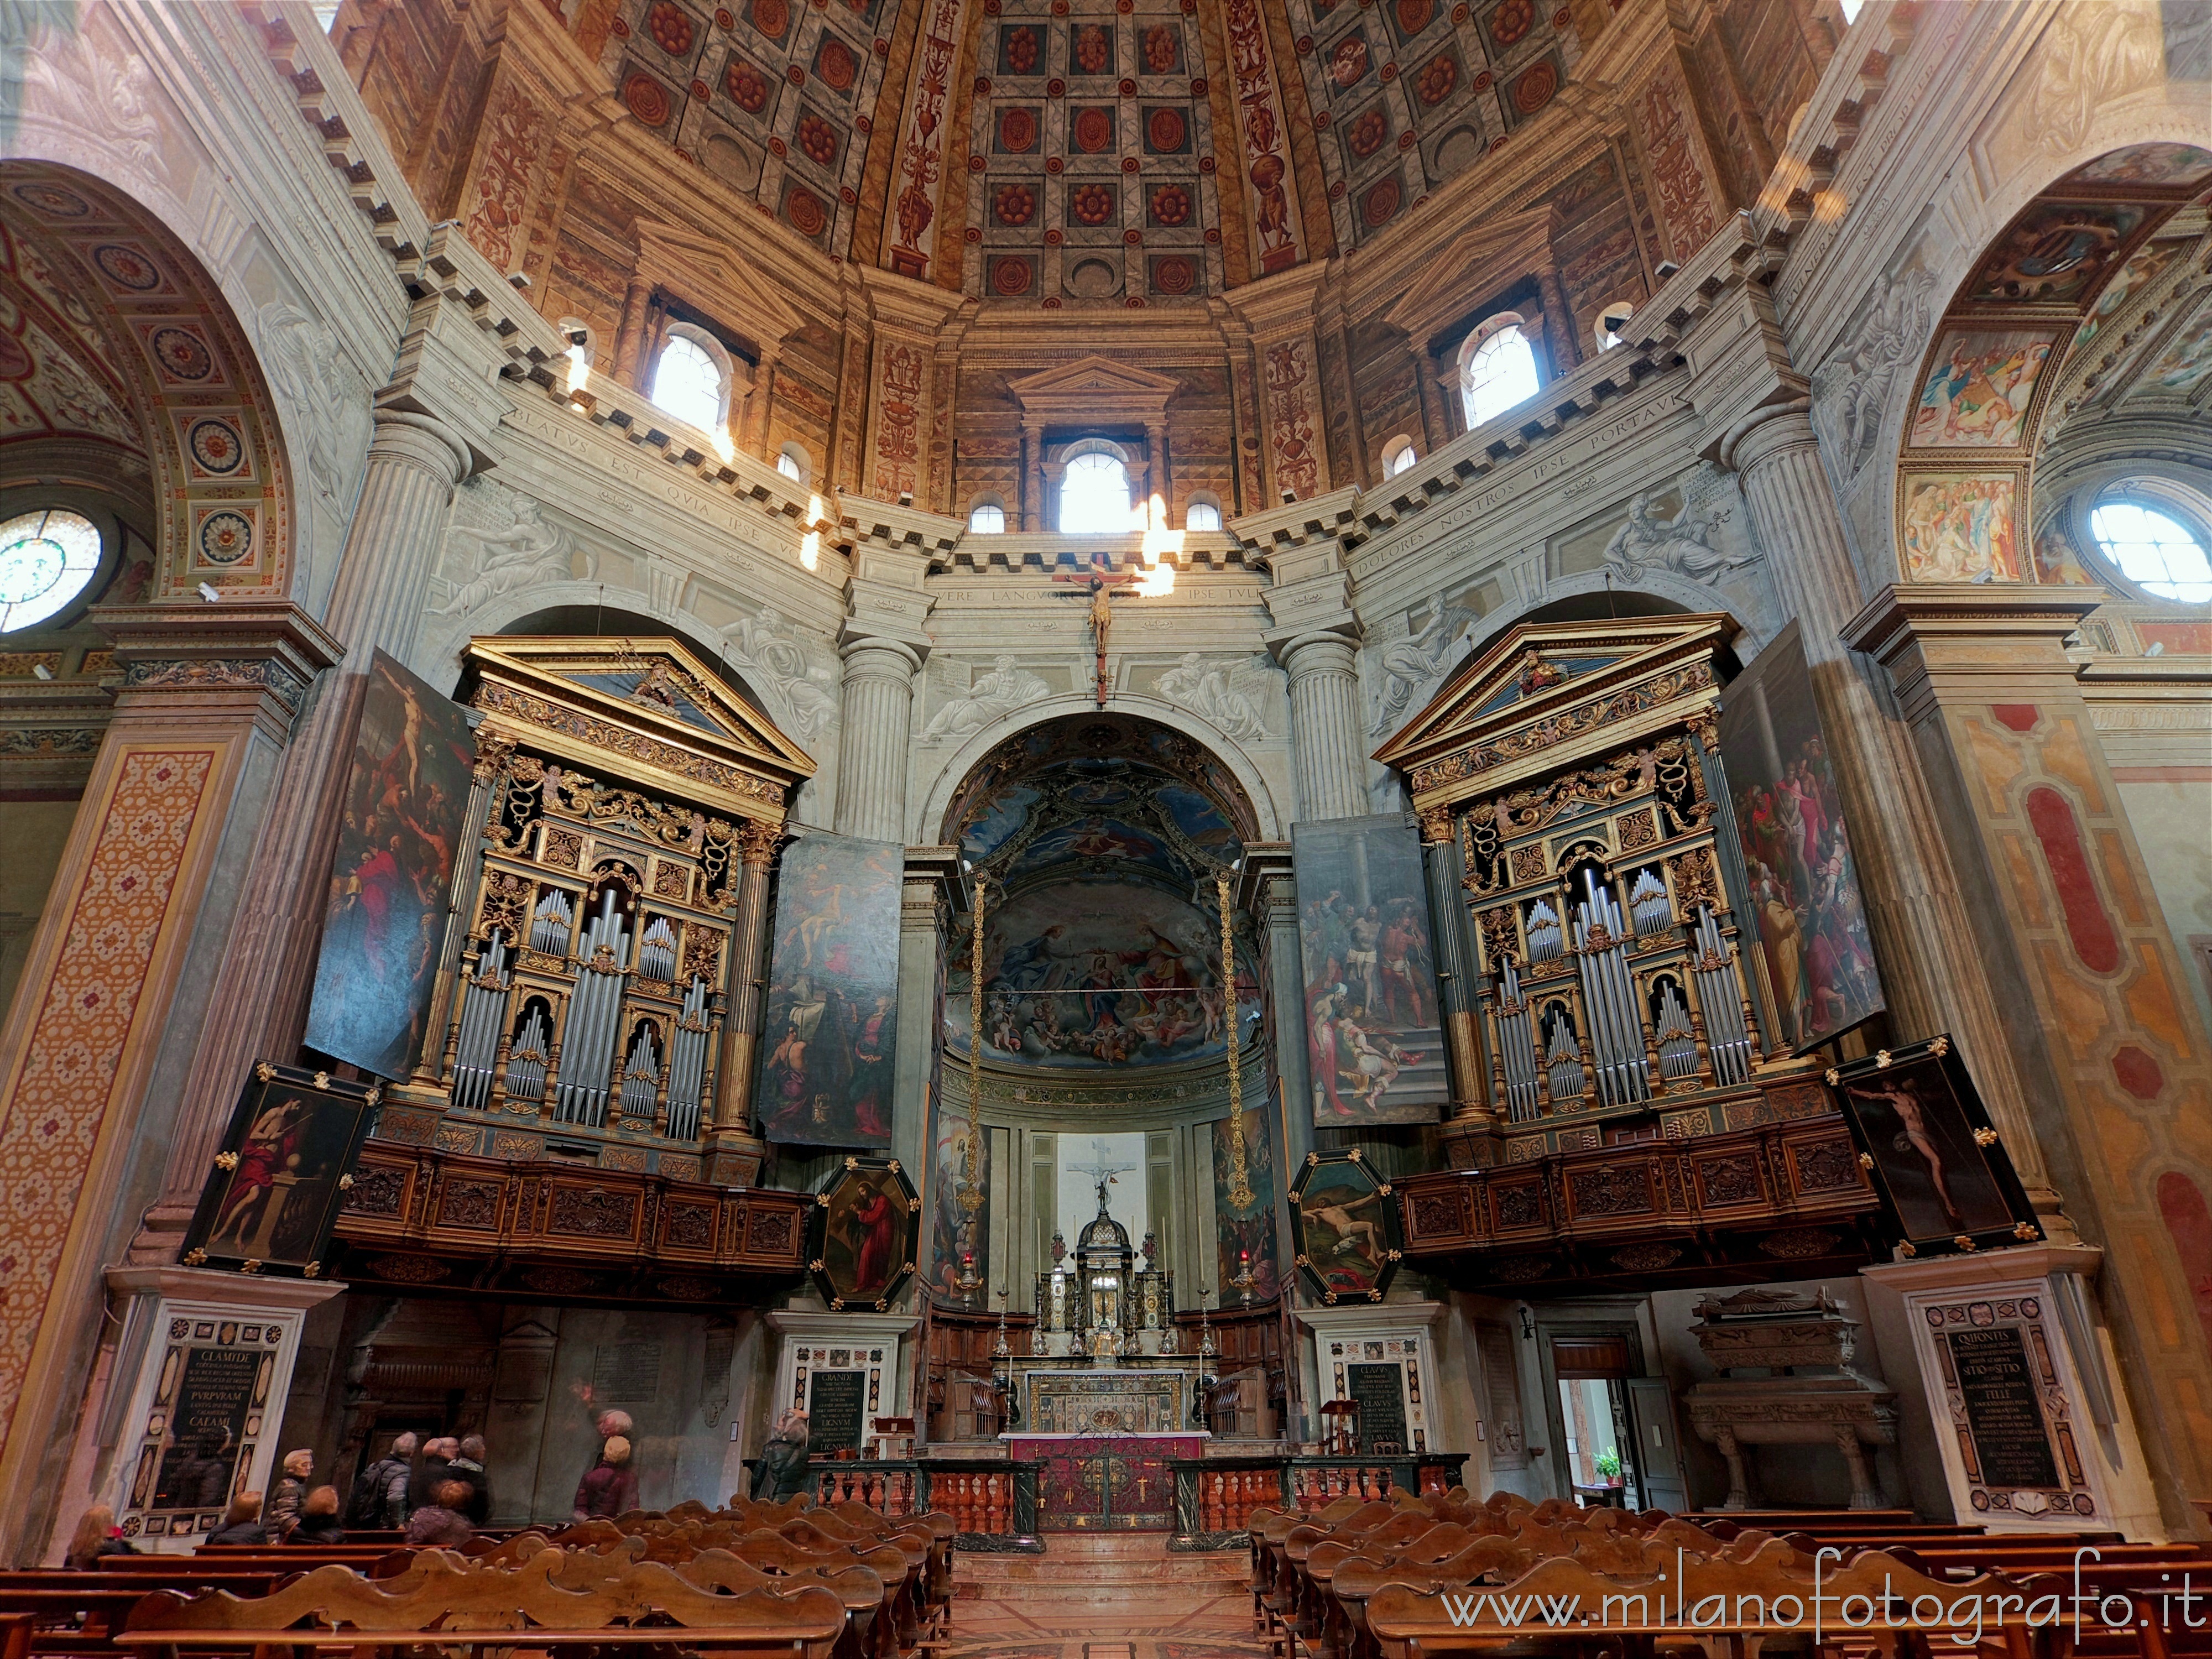 Milan (Italy): Octagon of the Church of Santa Maria della Passione - Milan (Italy)